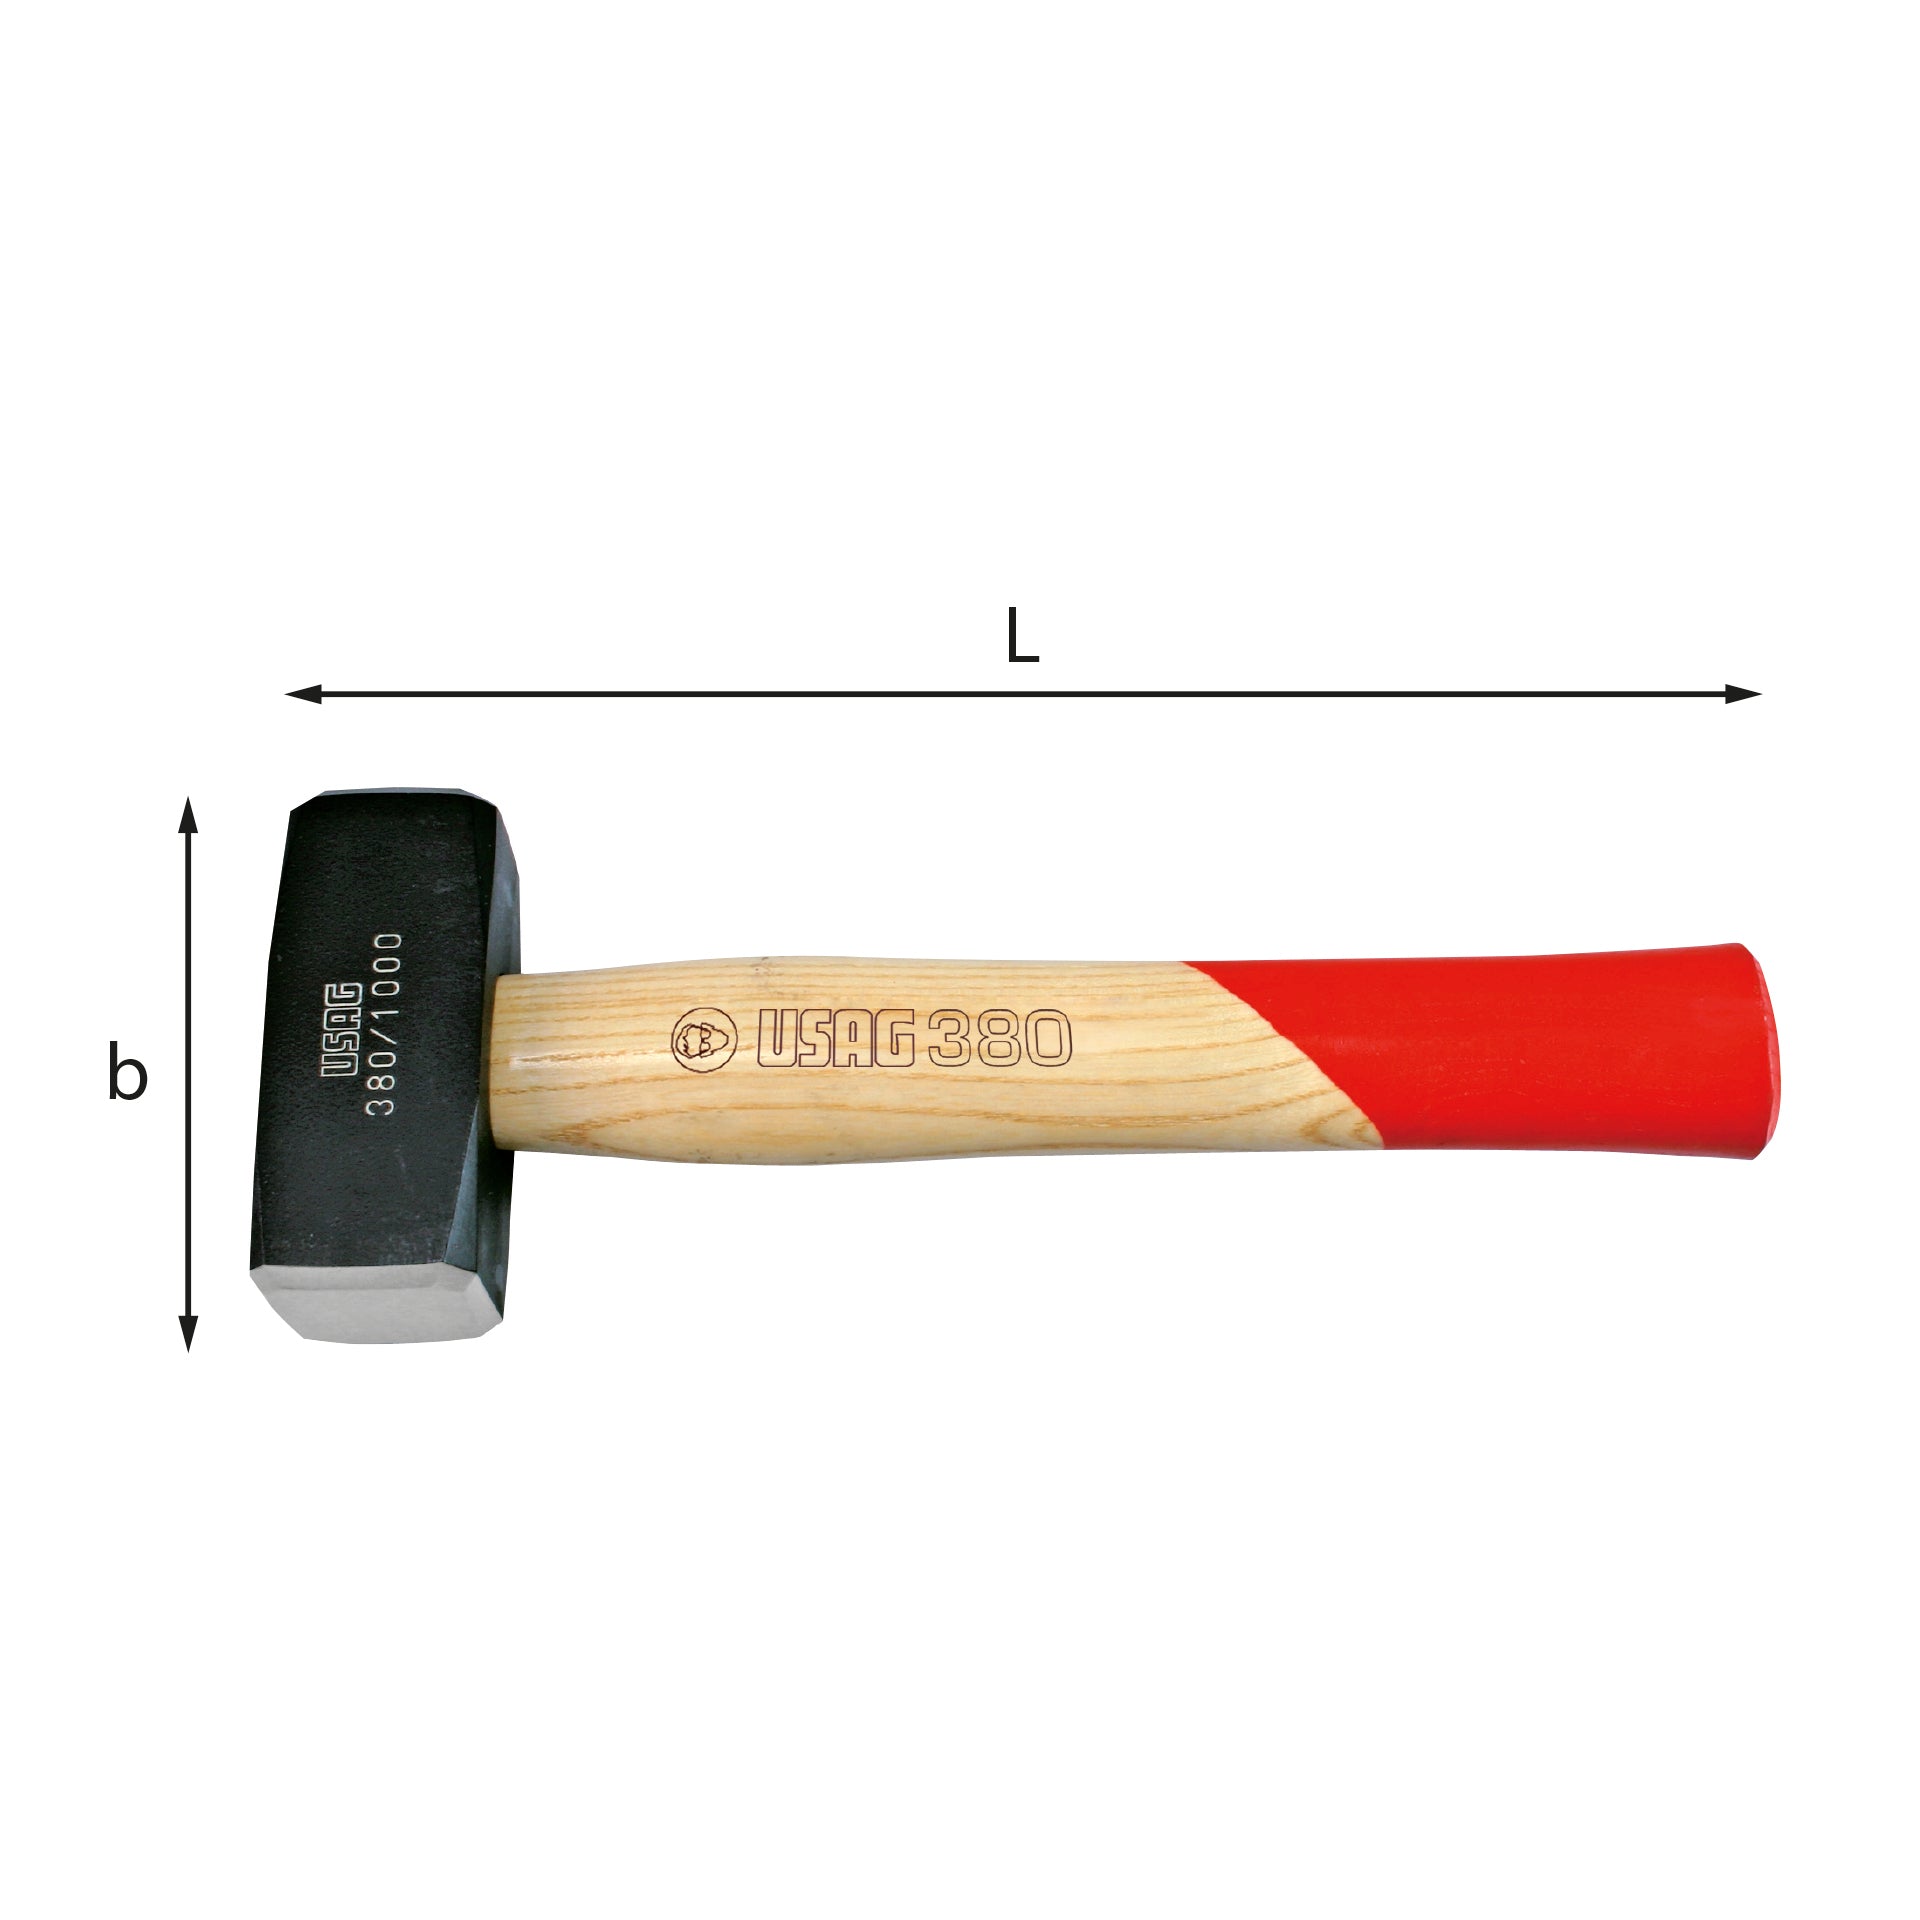 Sledge hammers 1000gr b 95mm L 260mm - Usag 380